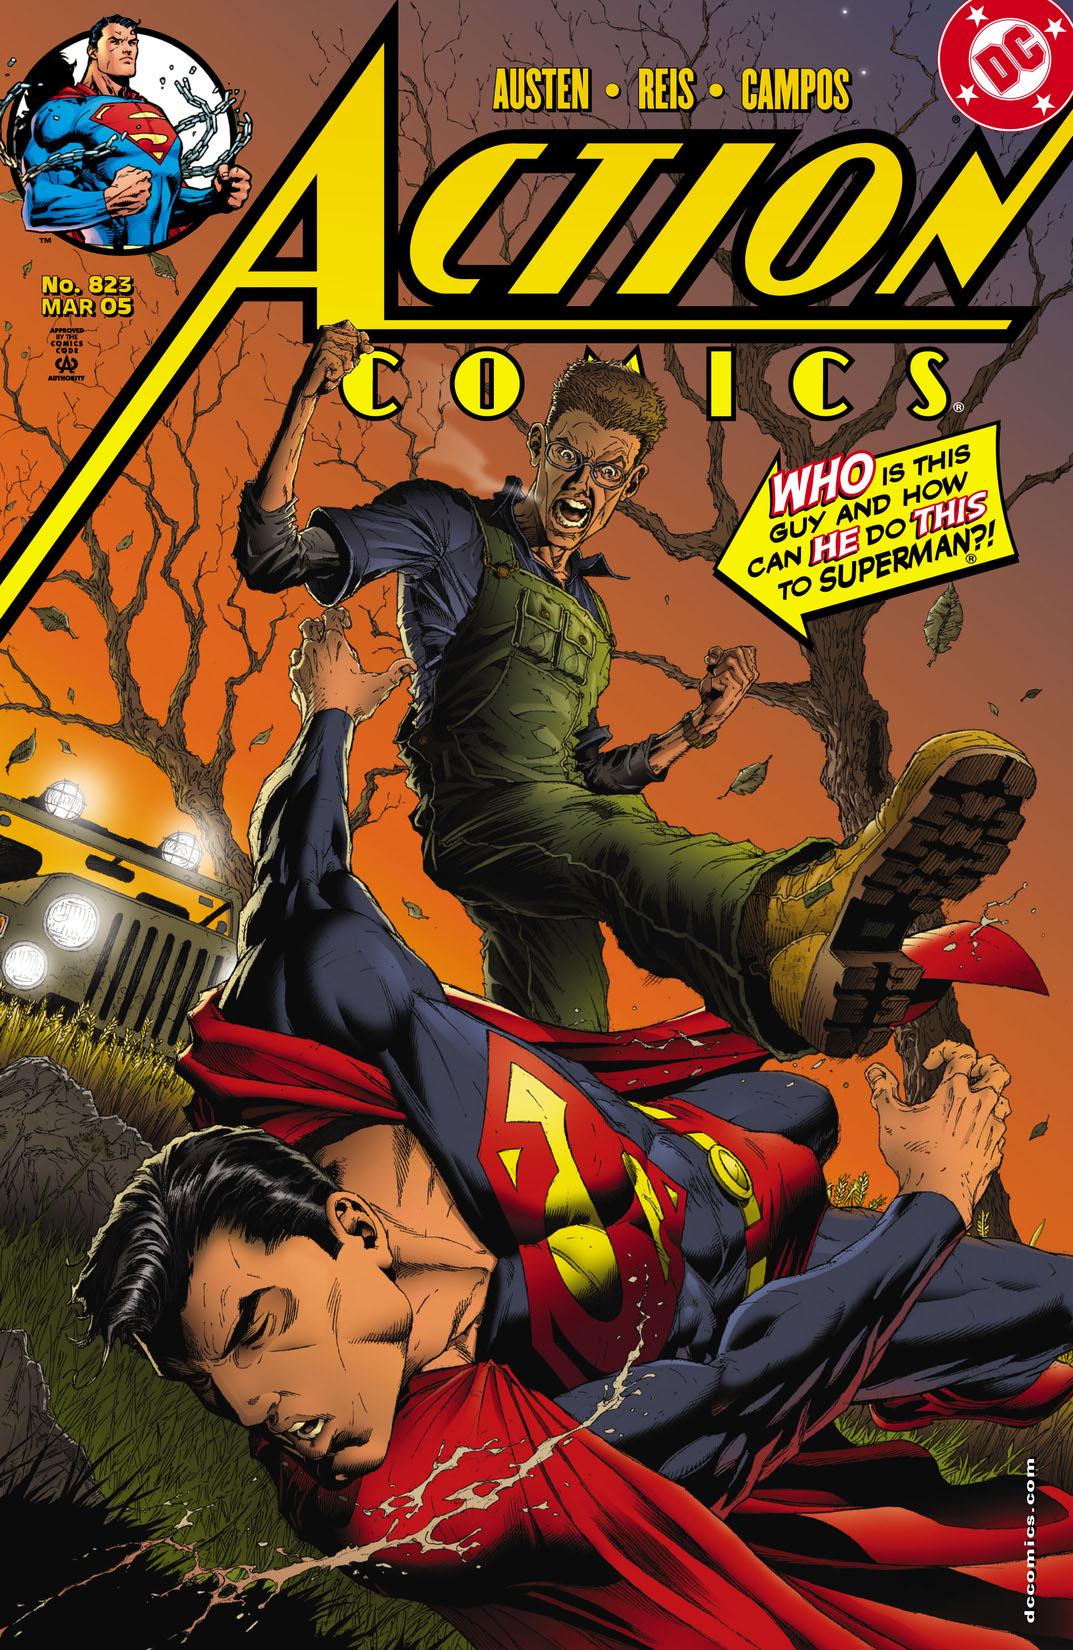 Action Comics (1938-) #823 preview images